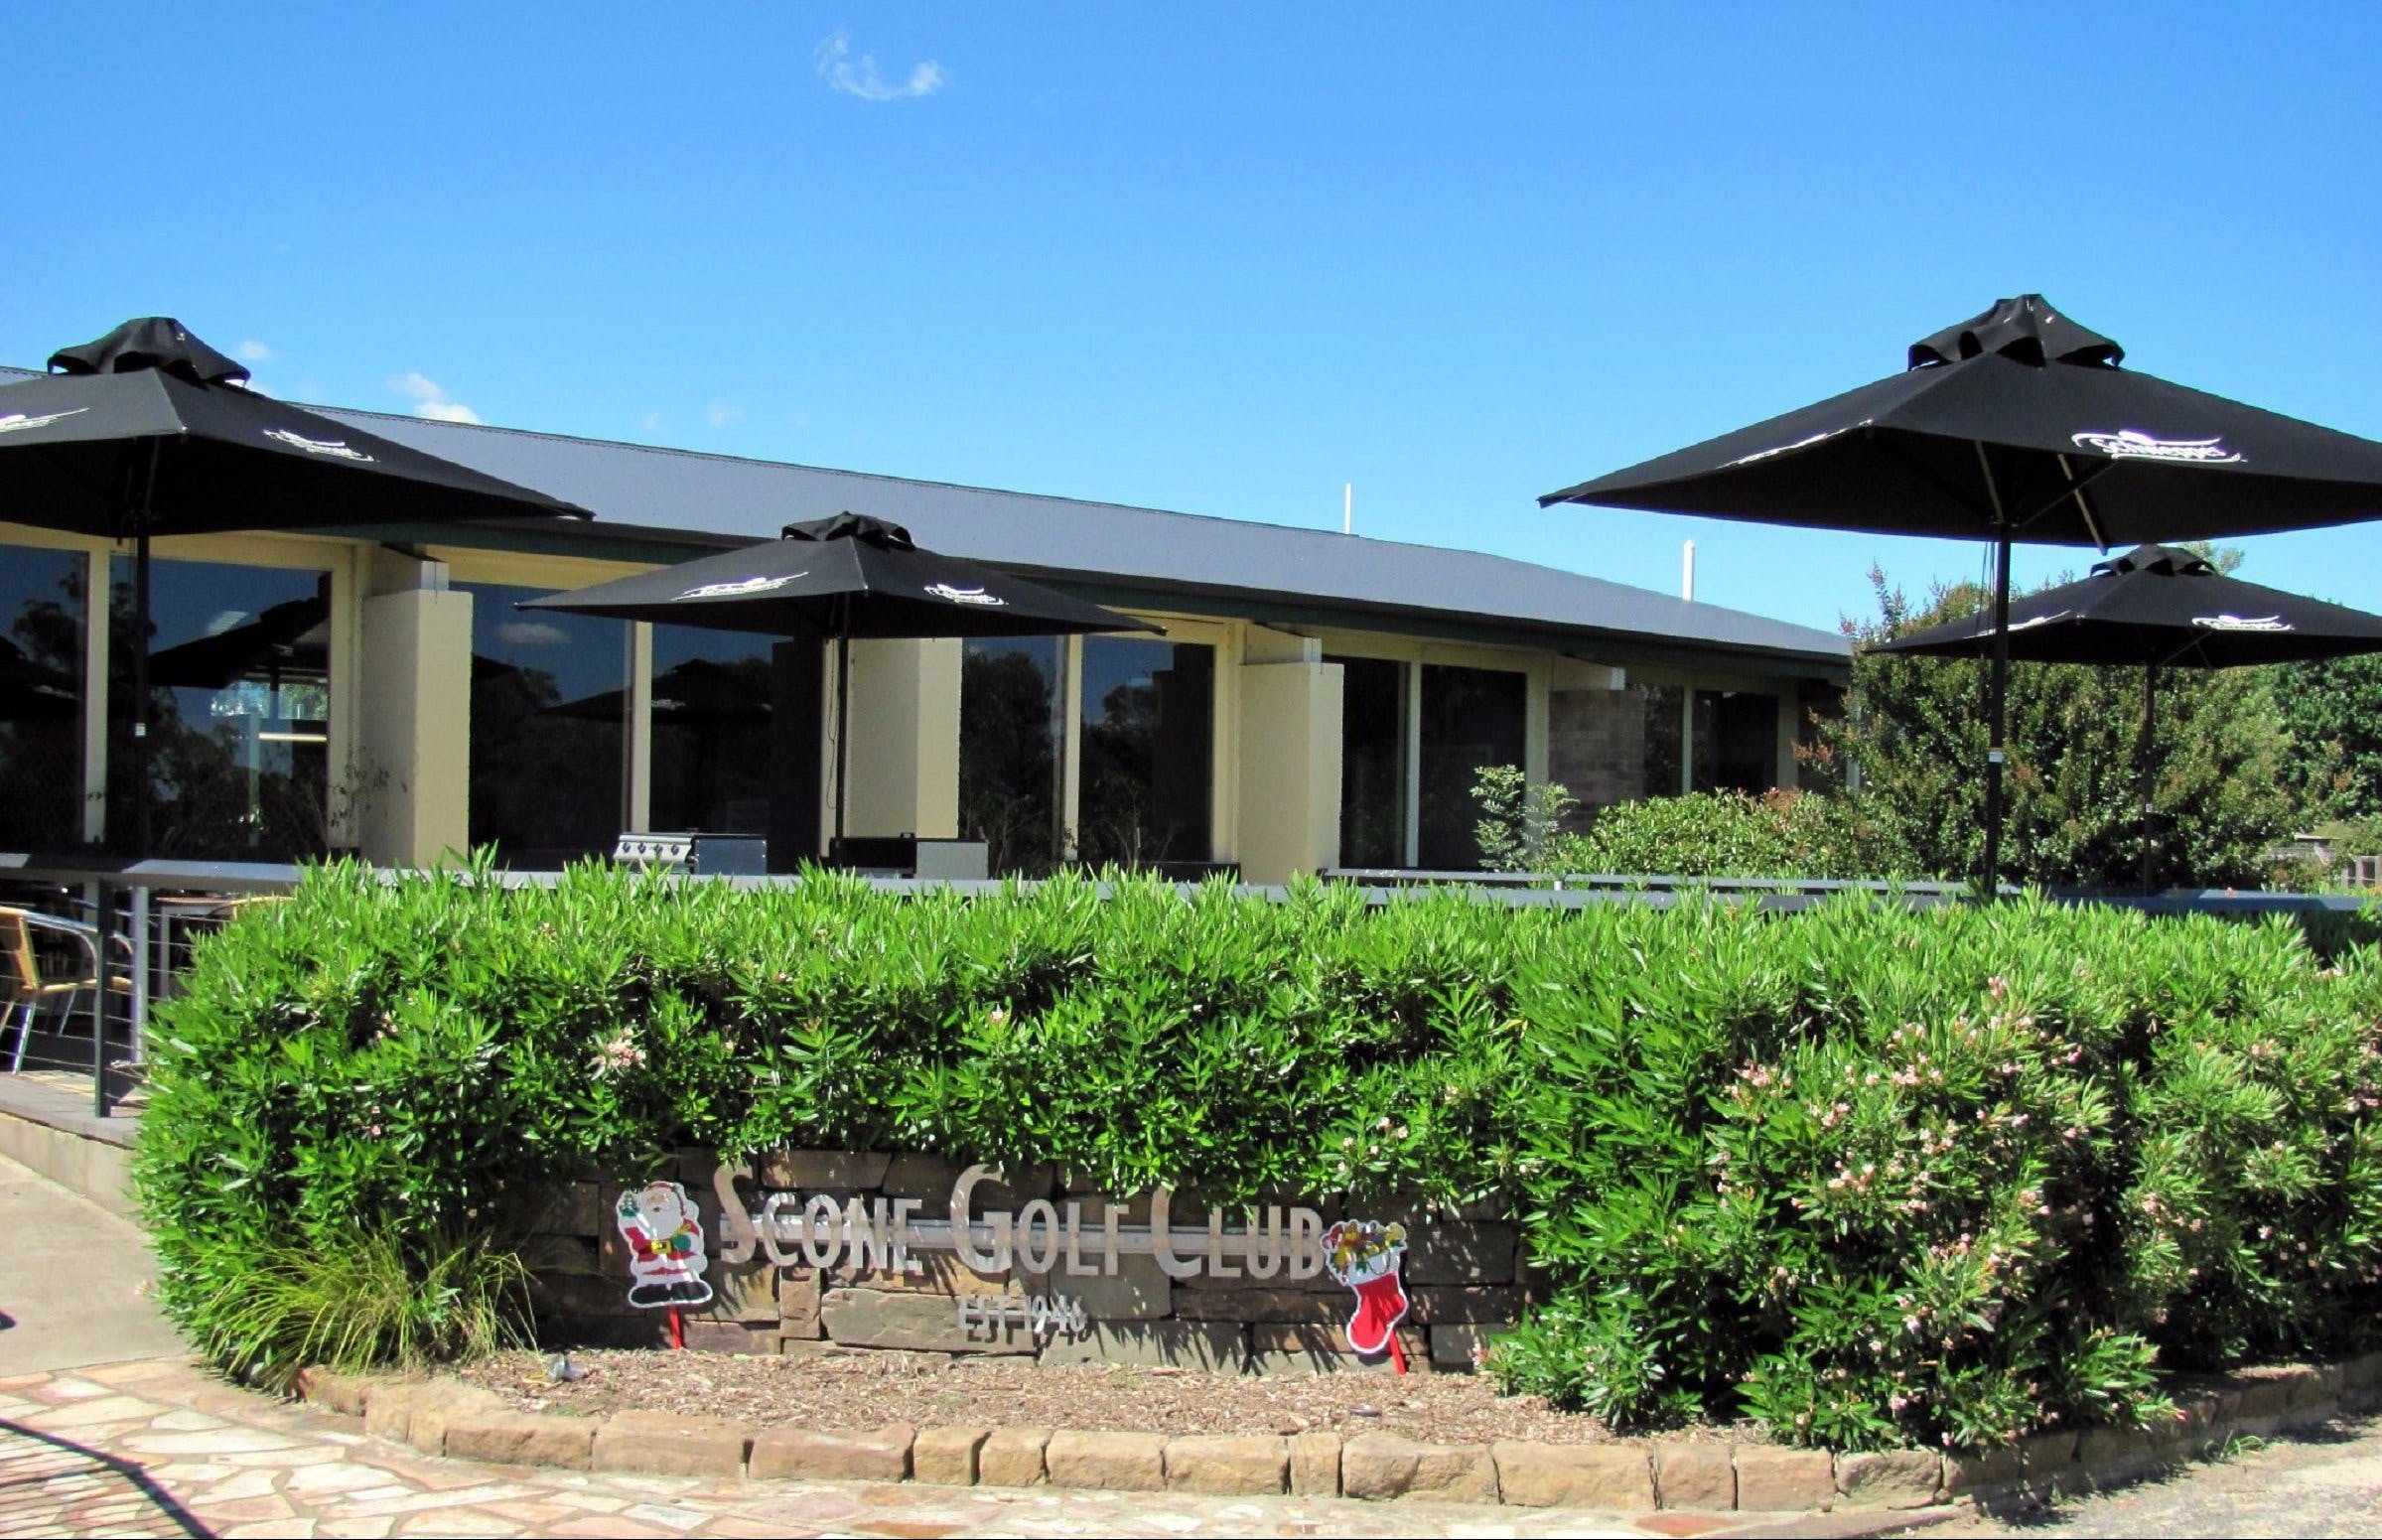 Scone Golf Club - Accommodation Sunshine Coast